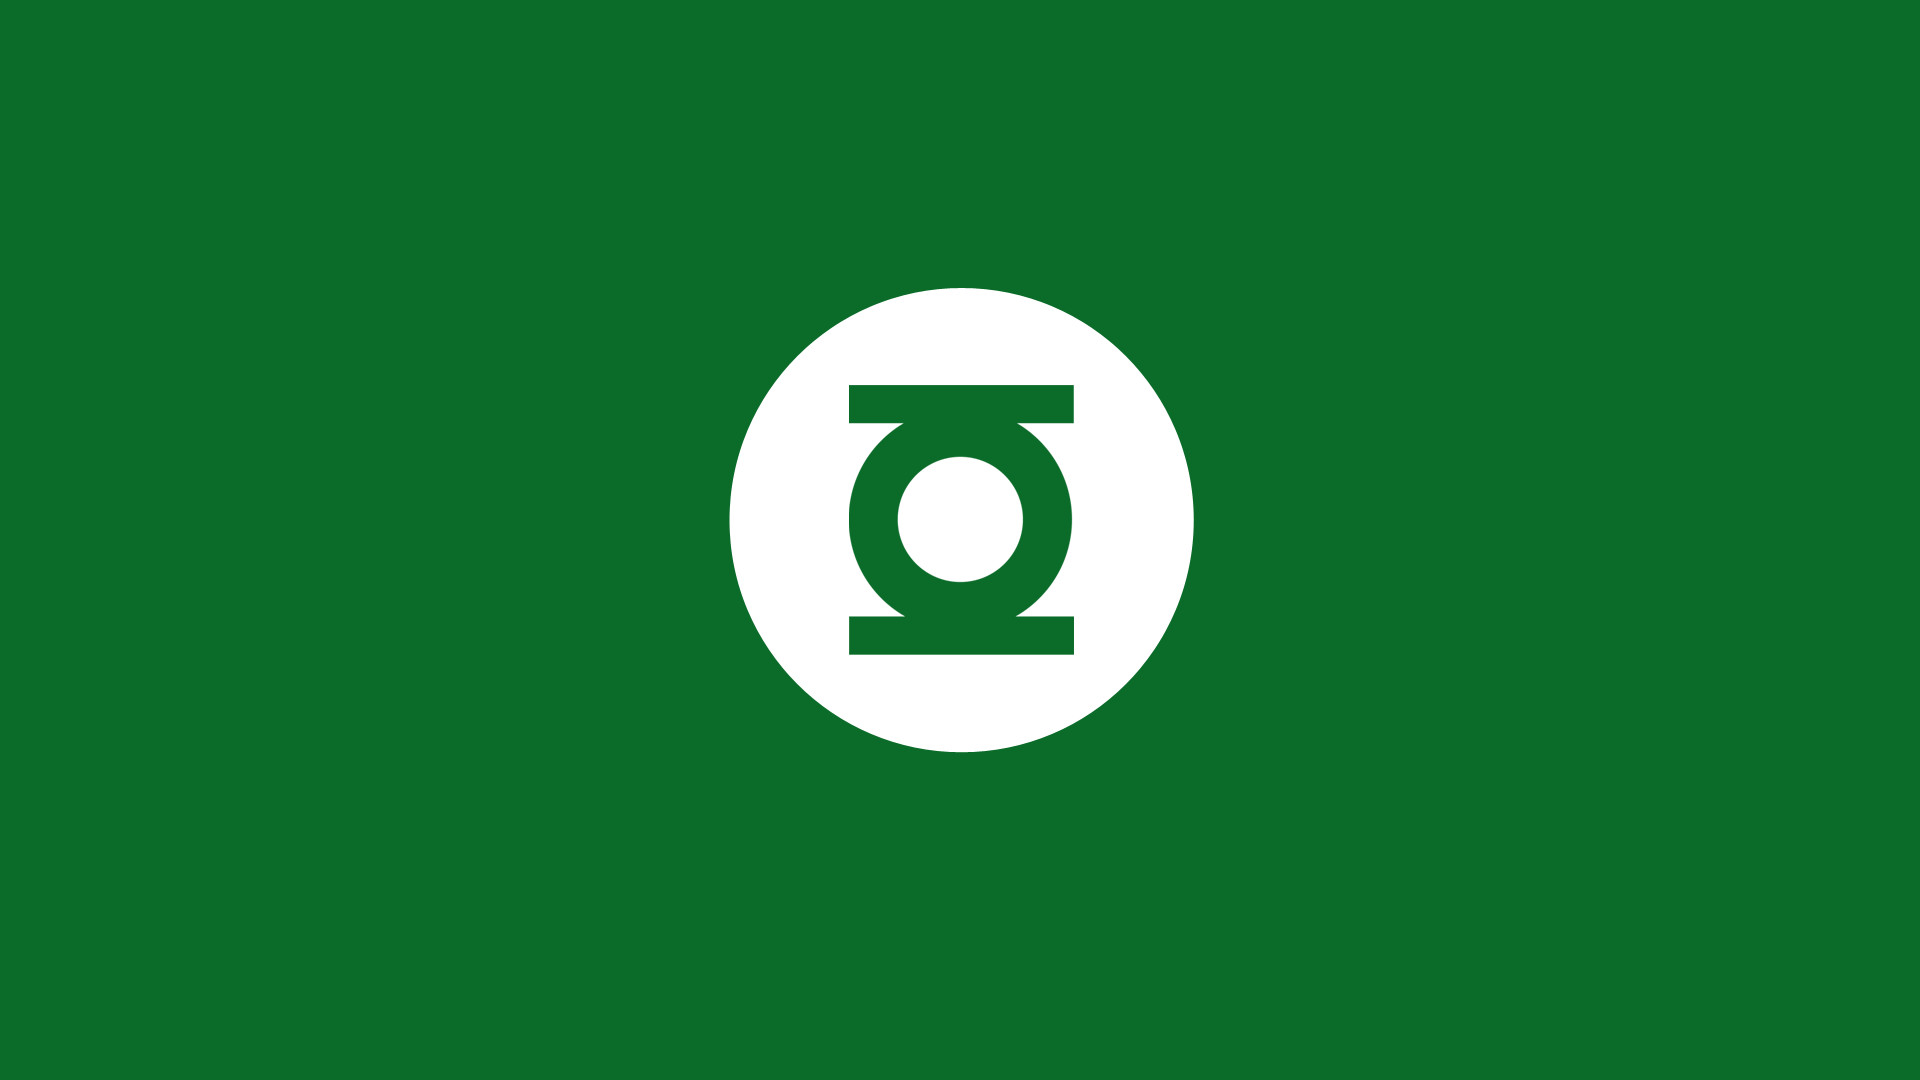 1920x1080 Green Lantern Logo Wallpapers - Wallpaper Cave